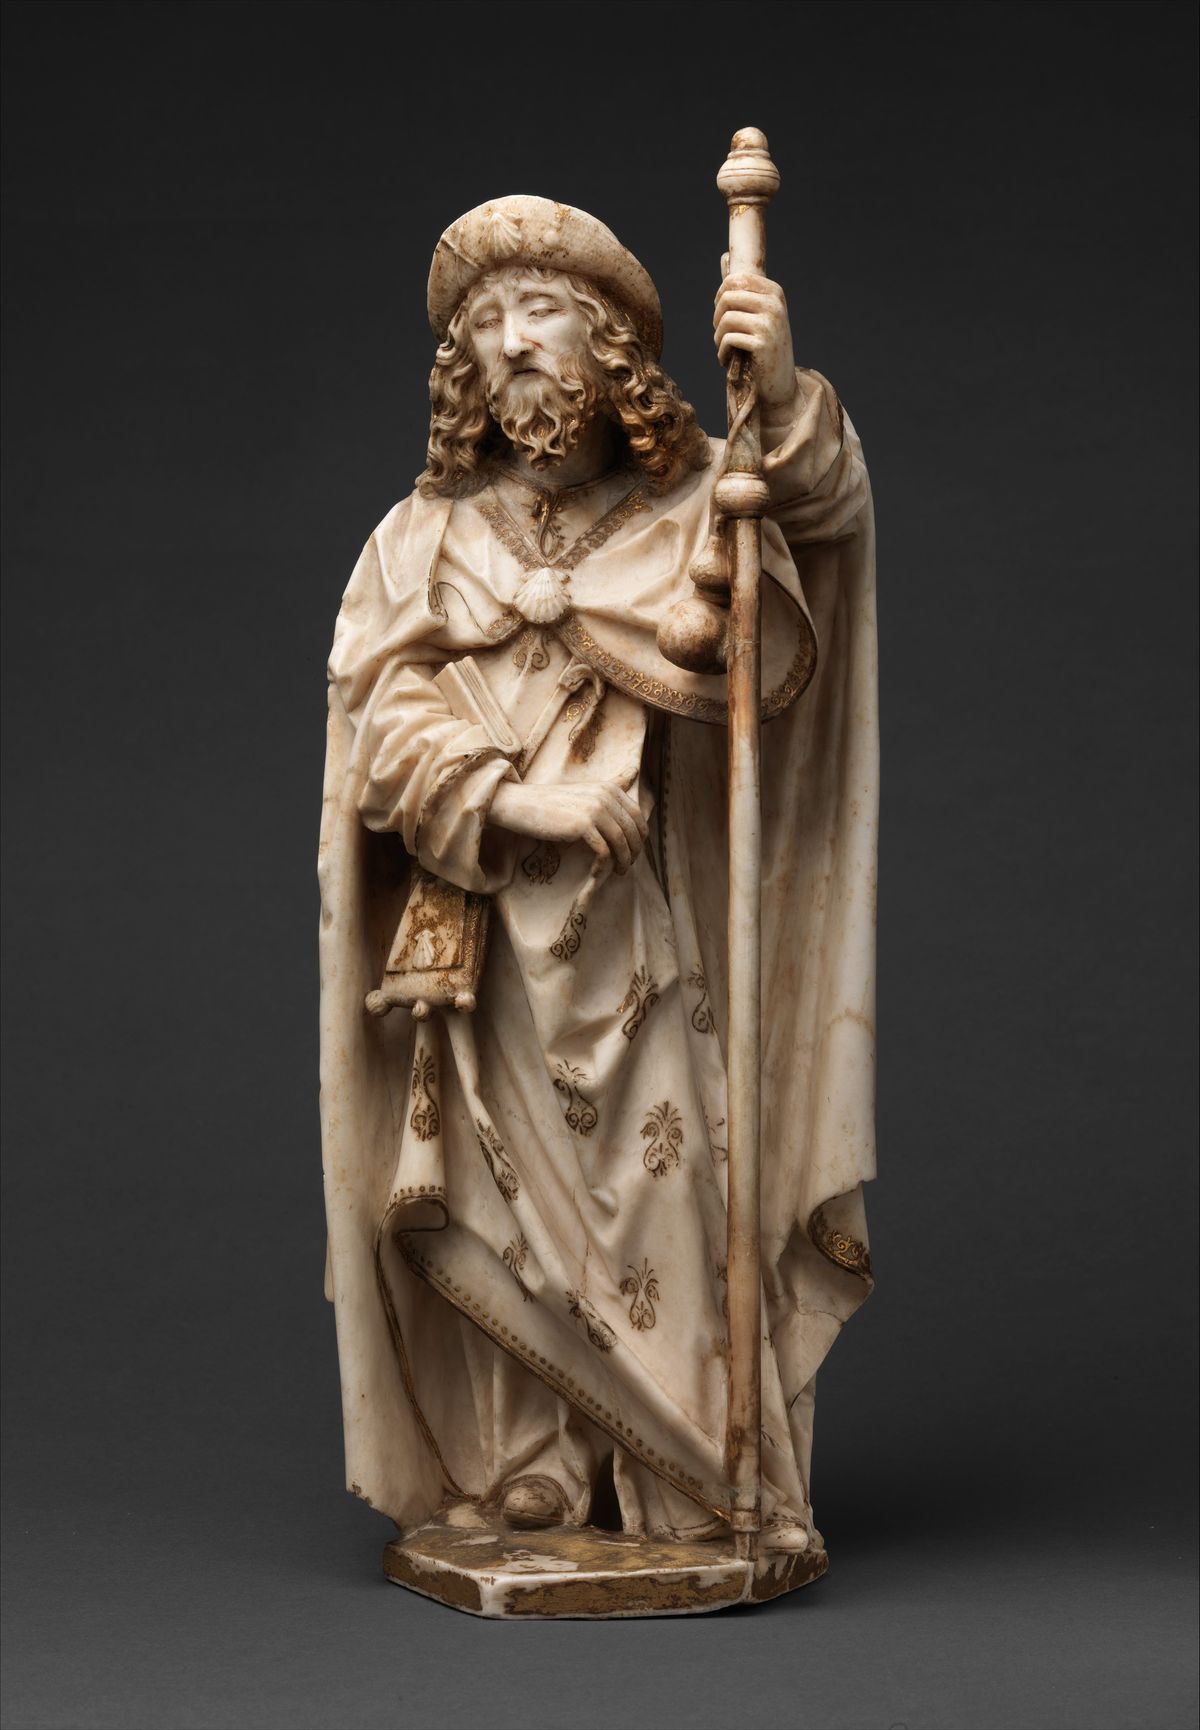 Saint James the Greater Statue (1489–1493, Spanish) by Gil de Siloe - Catholic Stock Photo